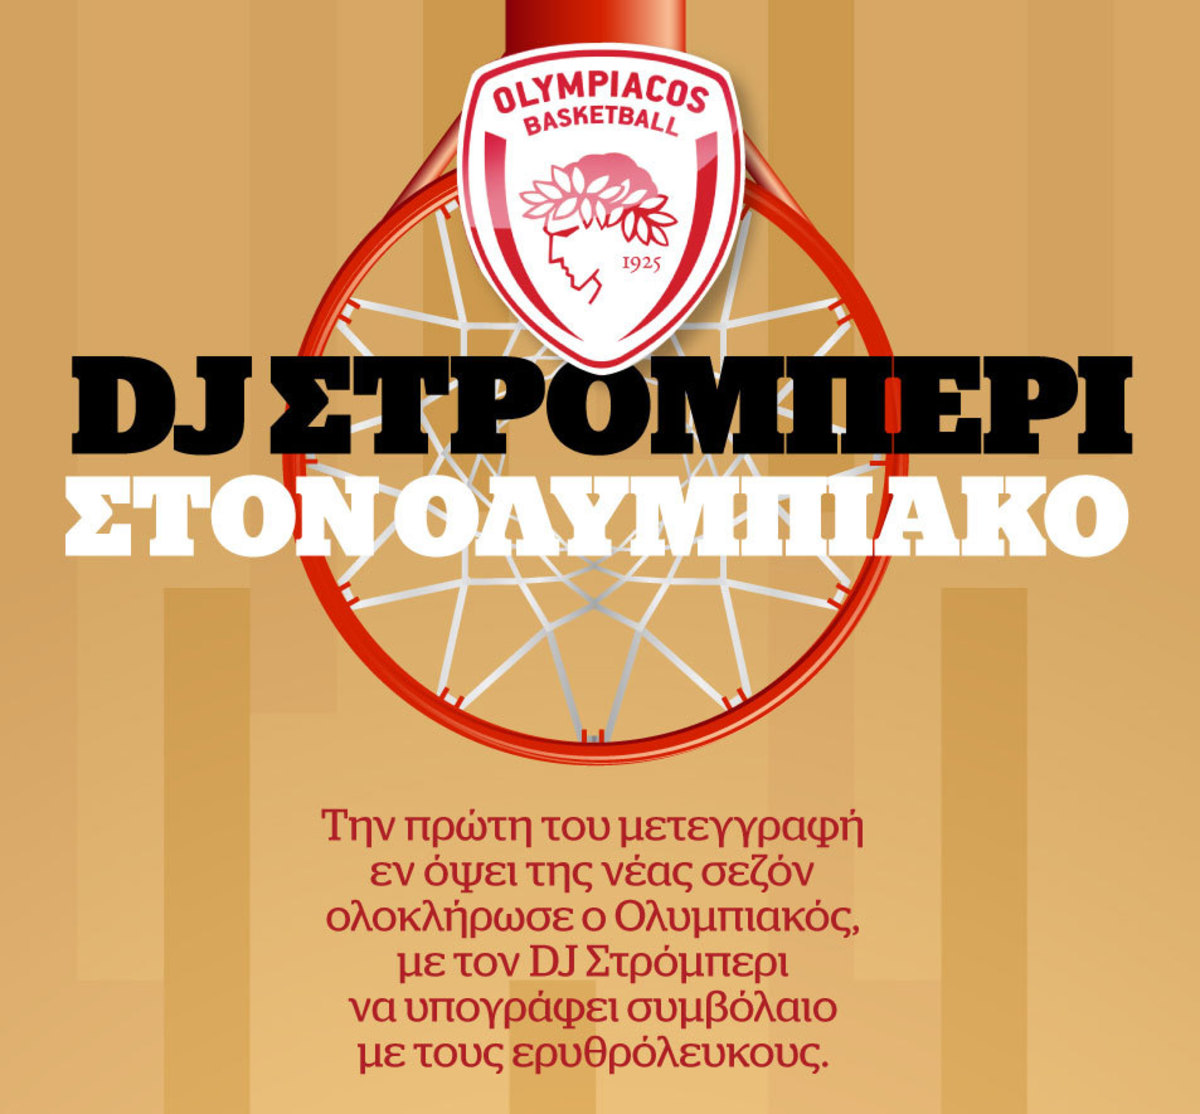 Infographic: Αυτός είναι ο DJ Στρόμπερι του Ολυμπιακού!